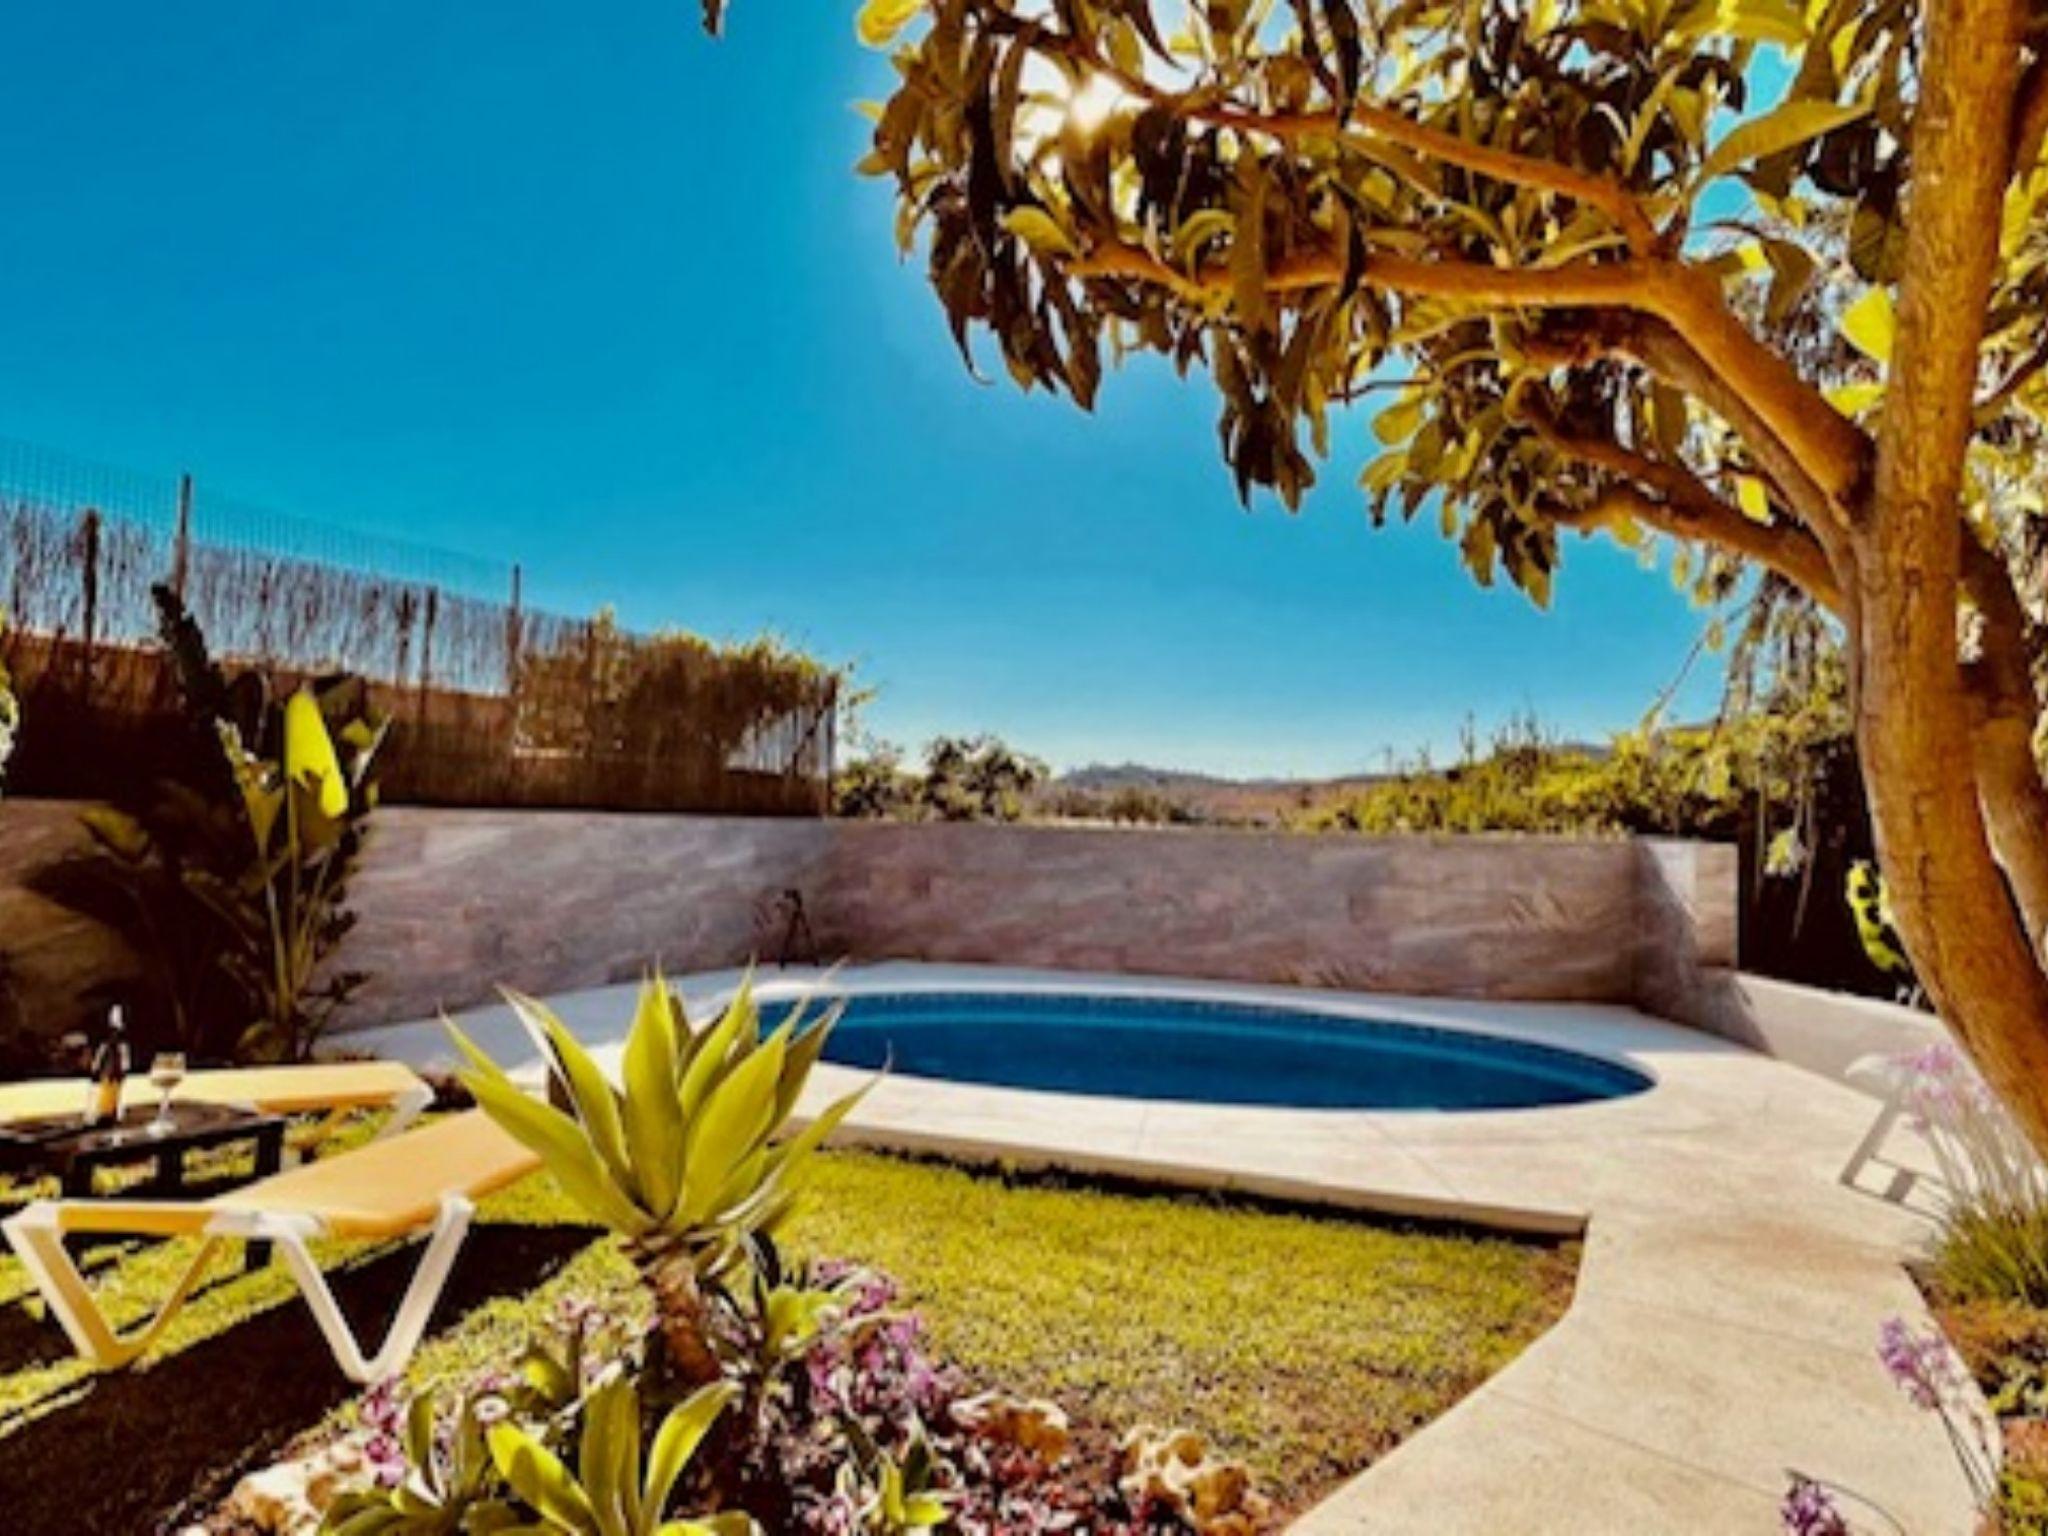 Foto 17 - Casa con 4 camere da letto a Vélez-Málaga con piscina privata e vista mare